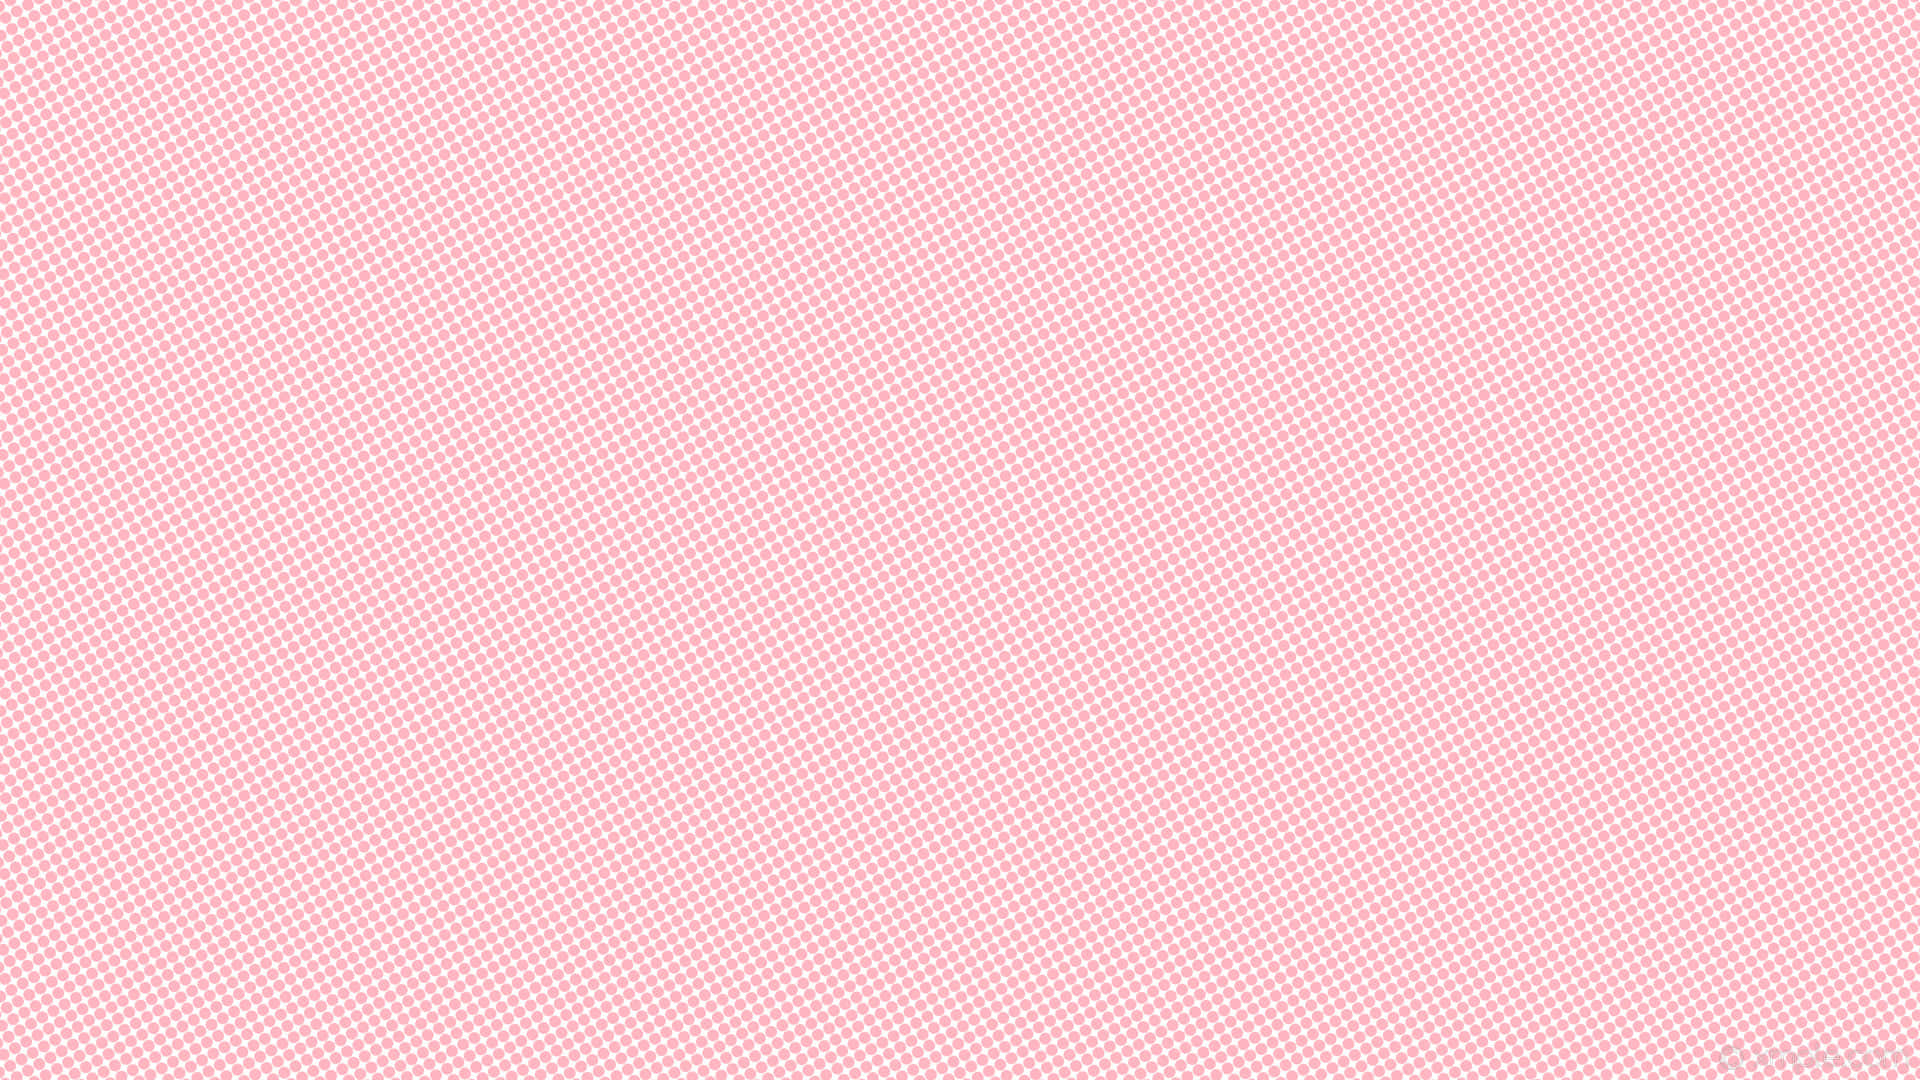 Light Pink Wallpaper for iPhone Free PNG ImageIllustoon